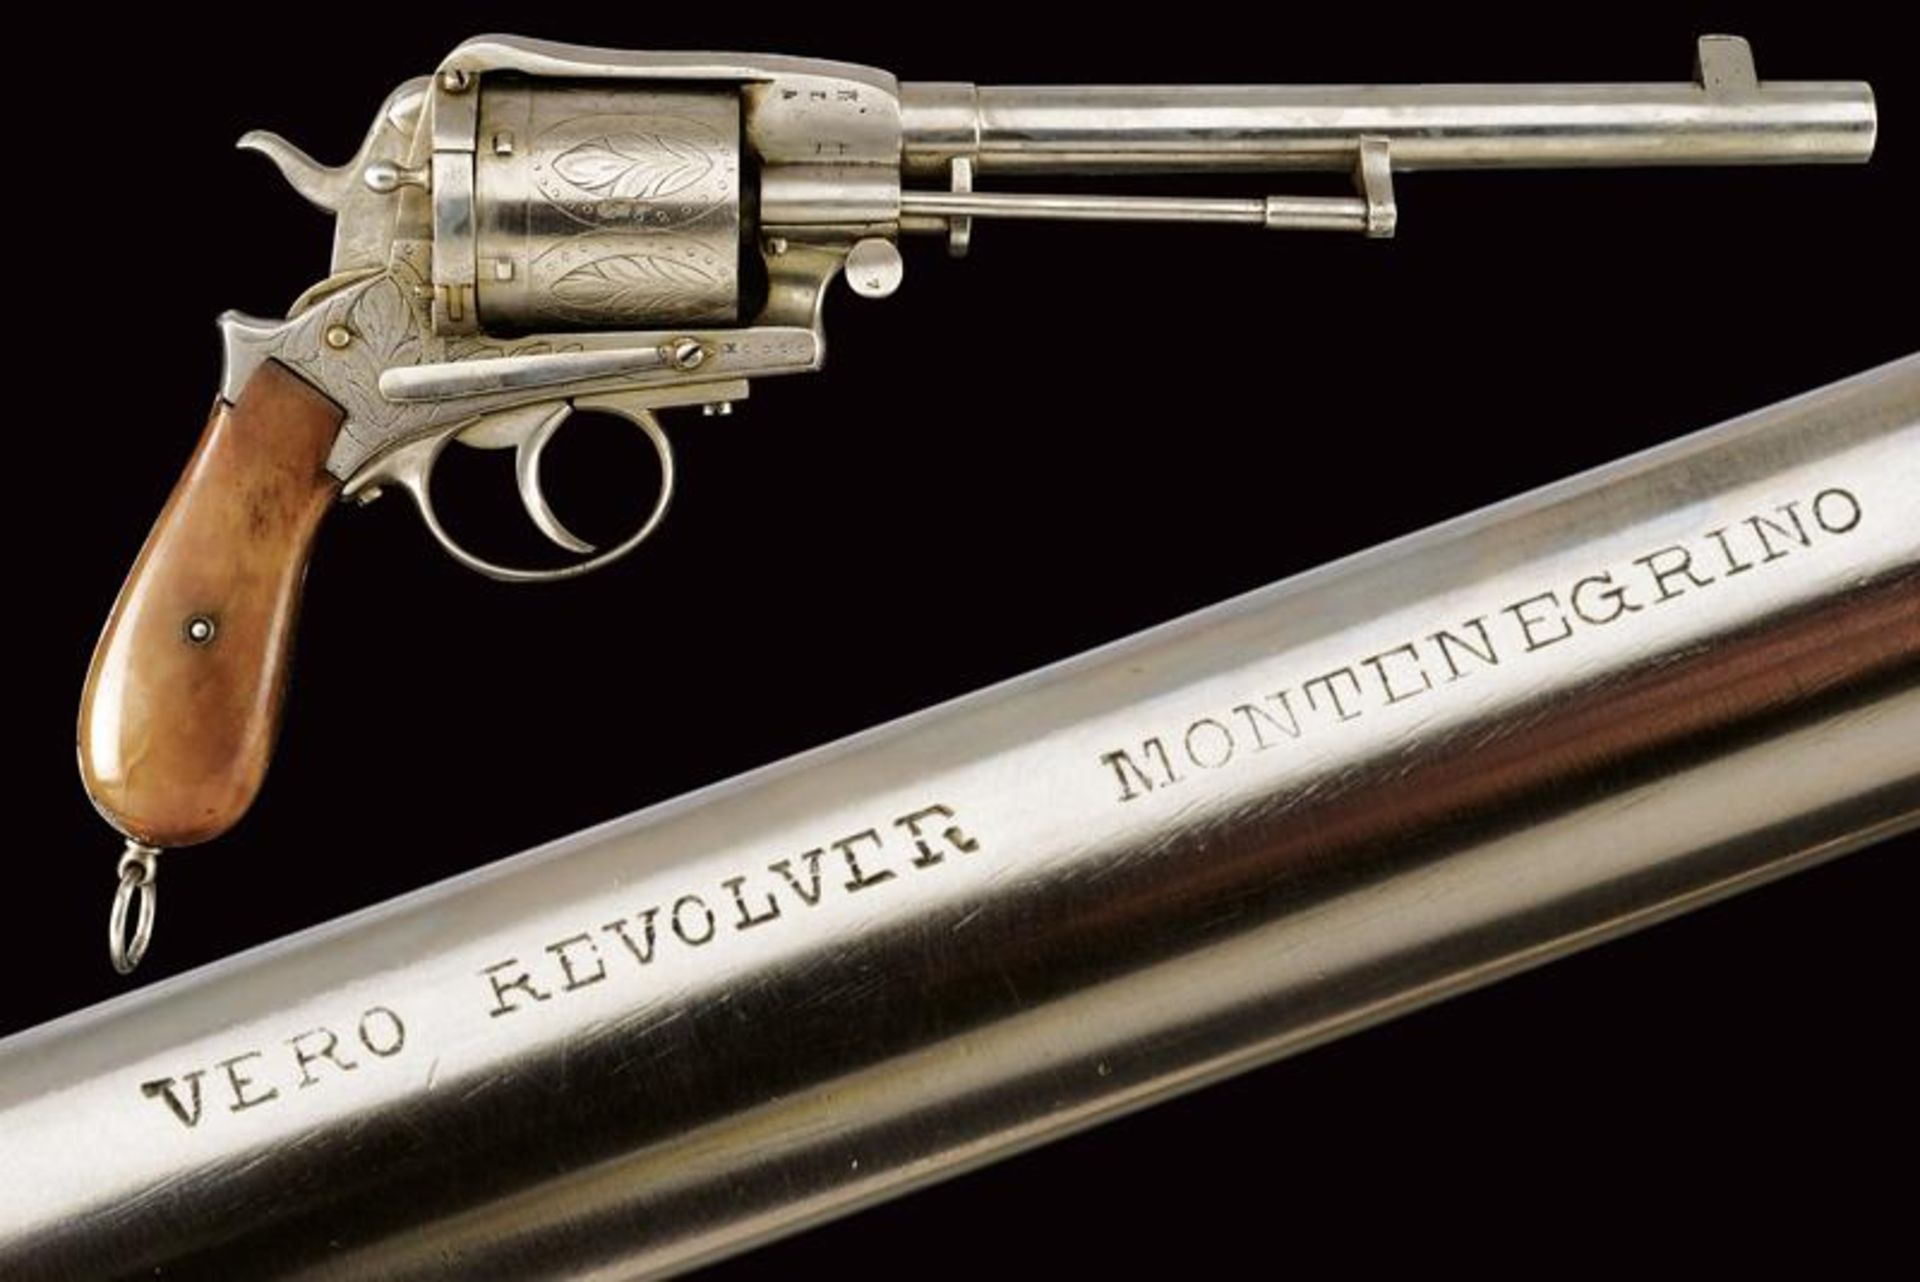 A Montenegrin center fire revolver